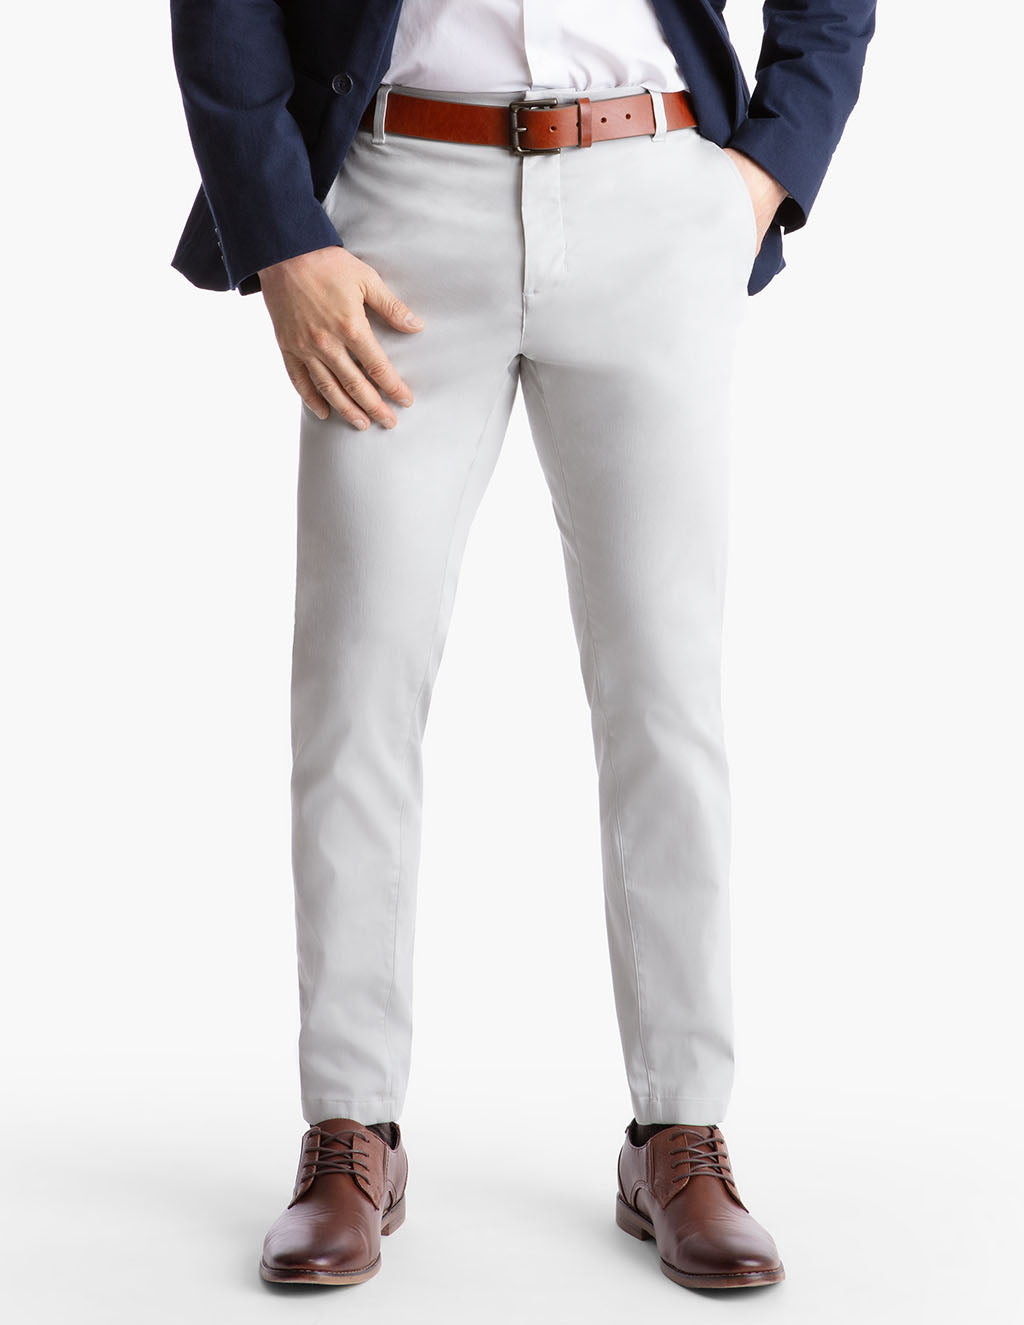 Ross Womens Size 5 Skinny Jeans Navy Zipper Front 5-Pocket Design